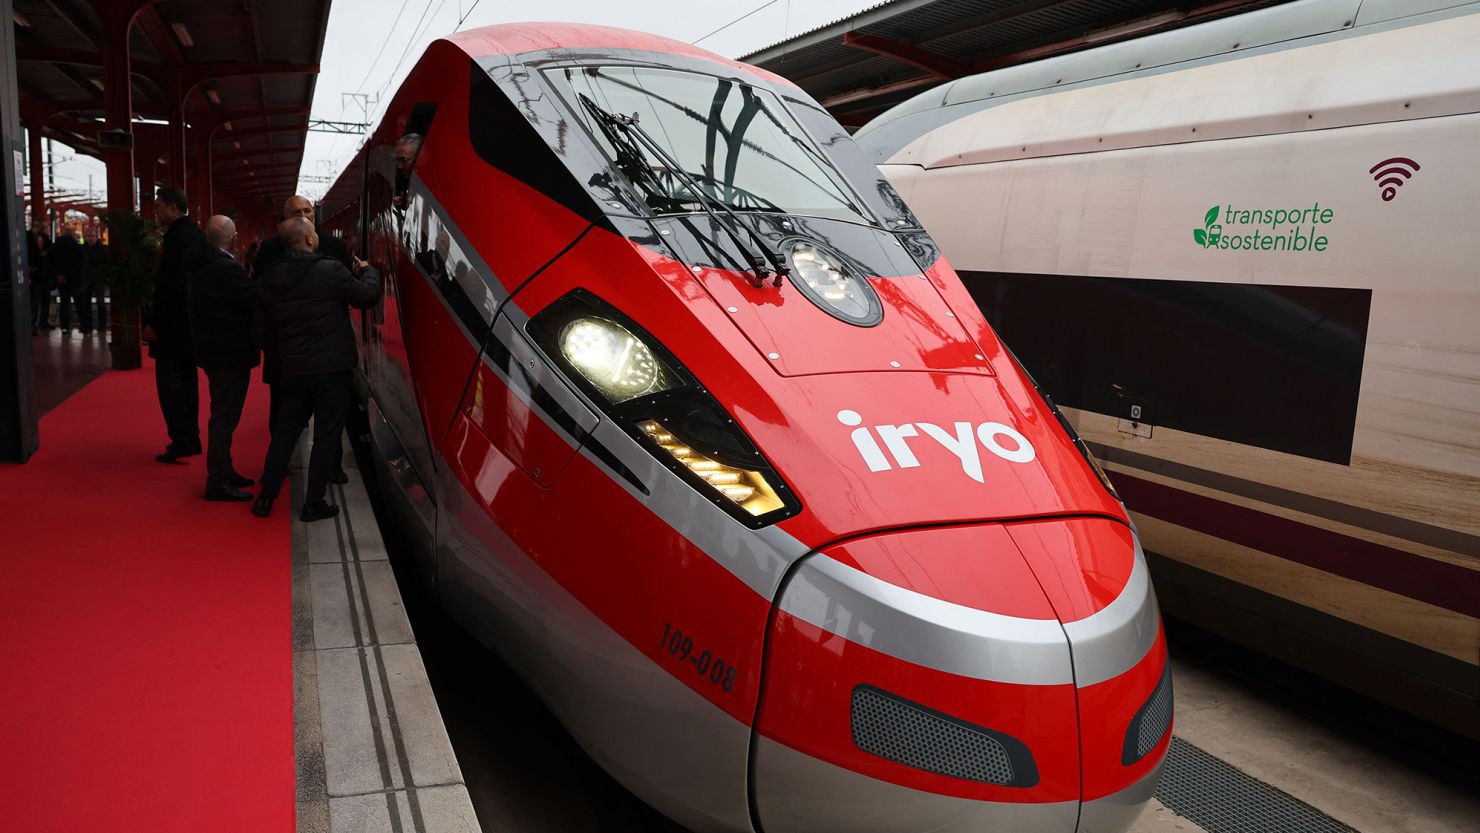 Iryo: Spain's new high-speed trains make it Europe's rail capital